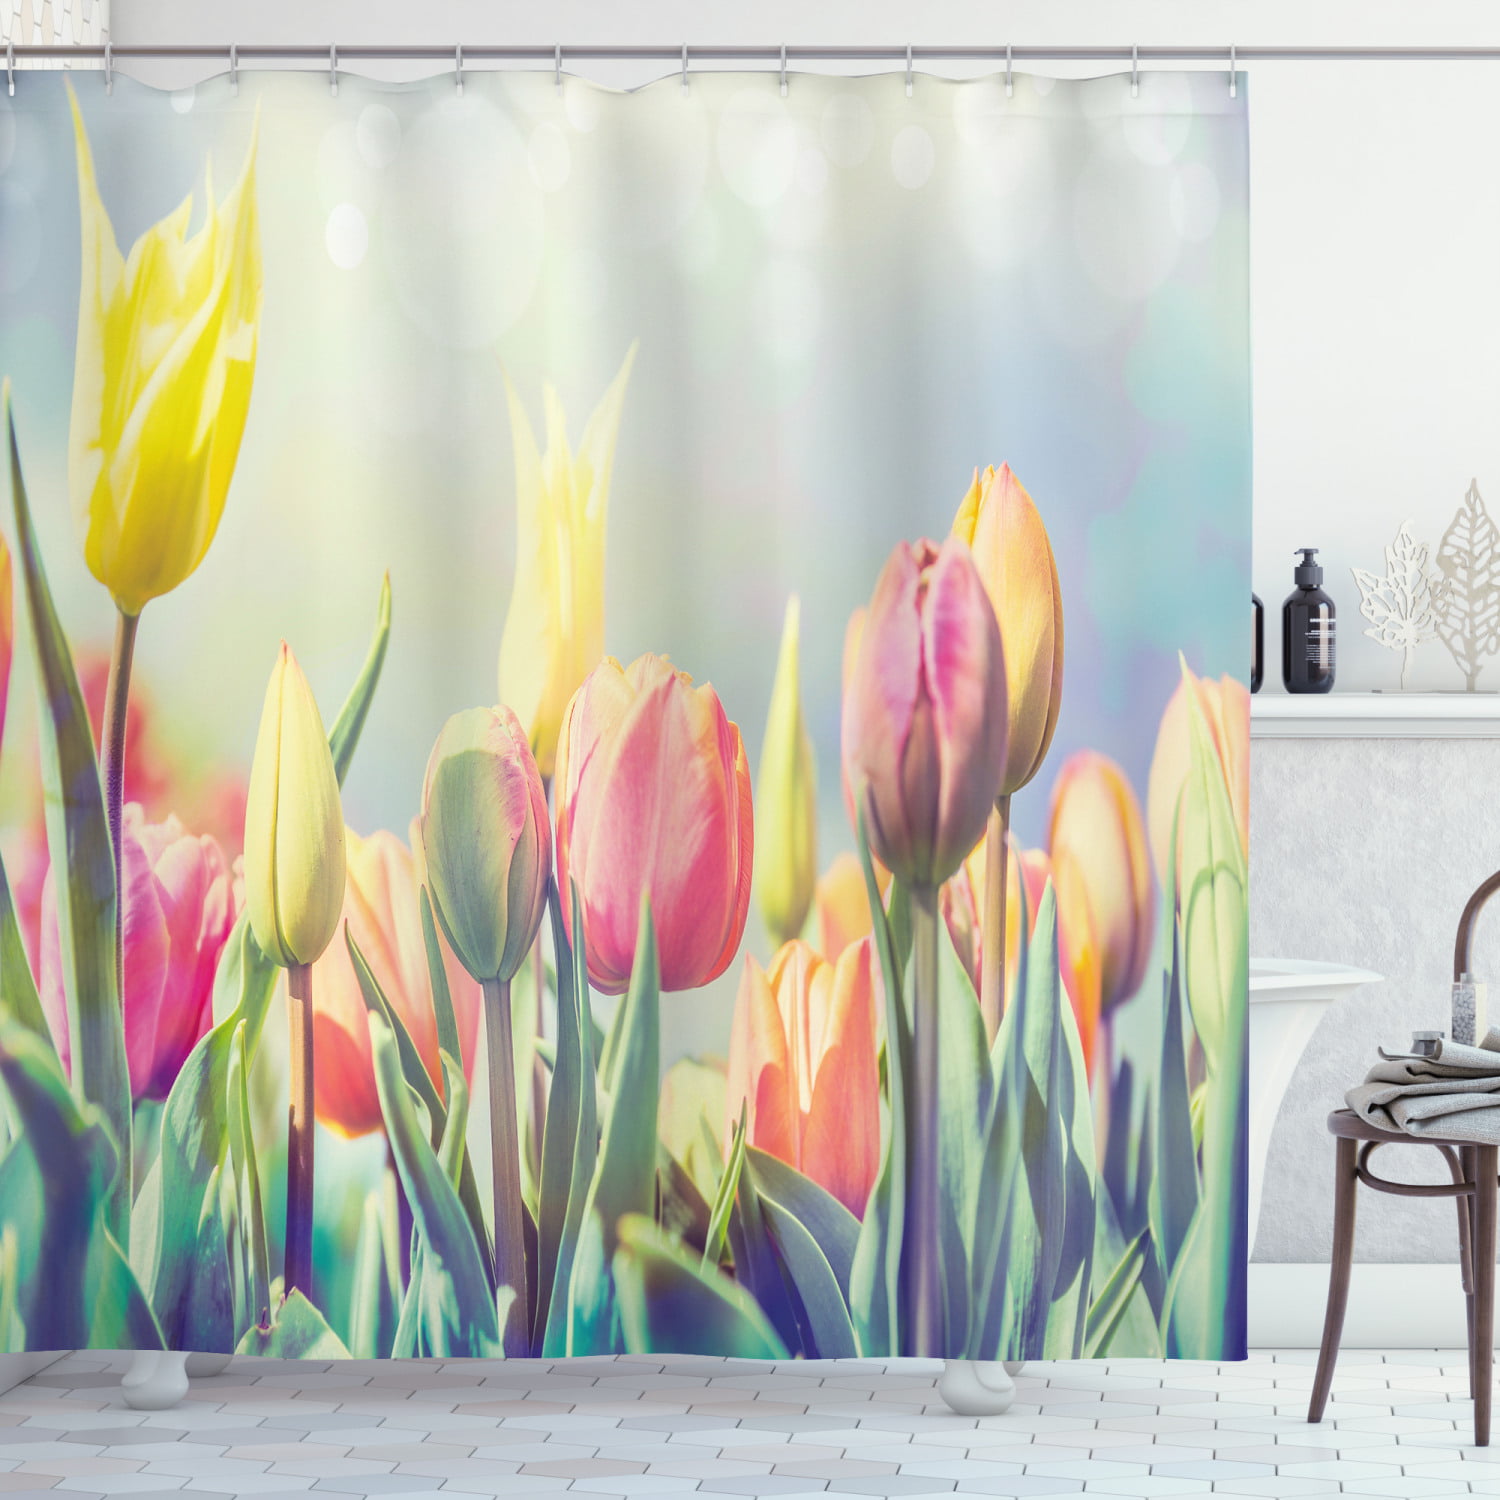 Happy Easter Shower Curtain Hooks Spring Flowers Daisy Tulips Bathroom Decor Mat 